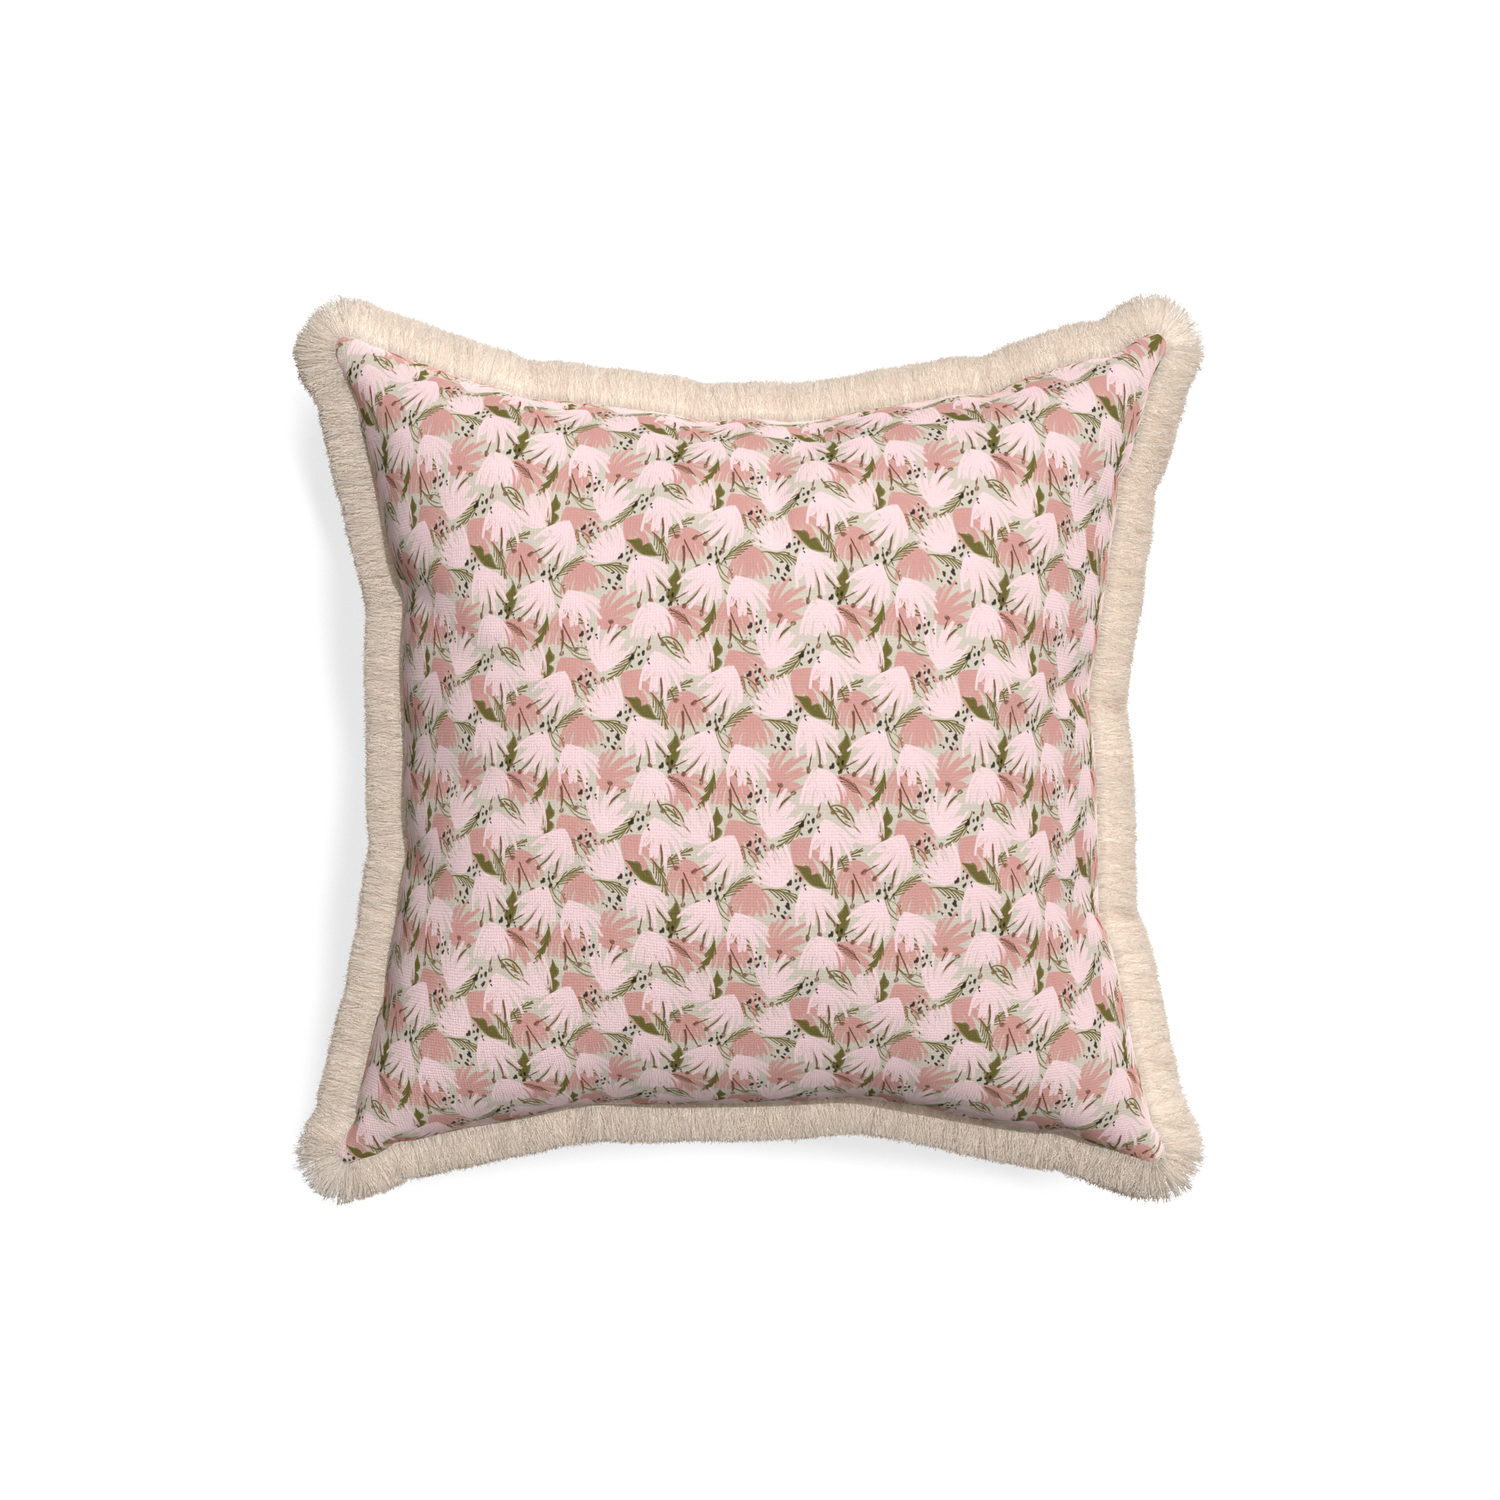 18-square eden pink custom pillow with cream fringe on white background